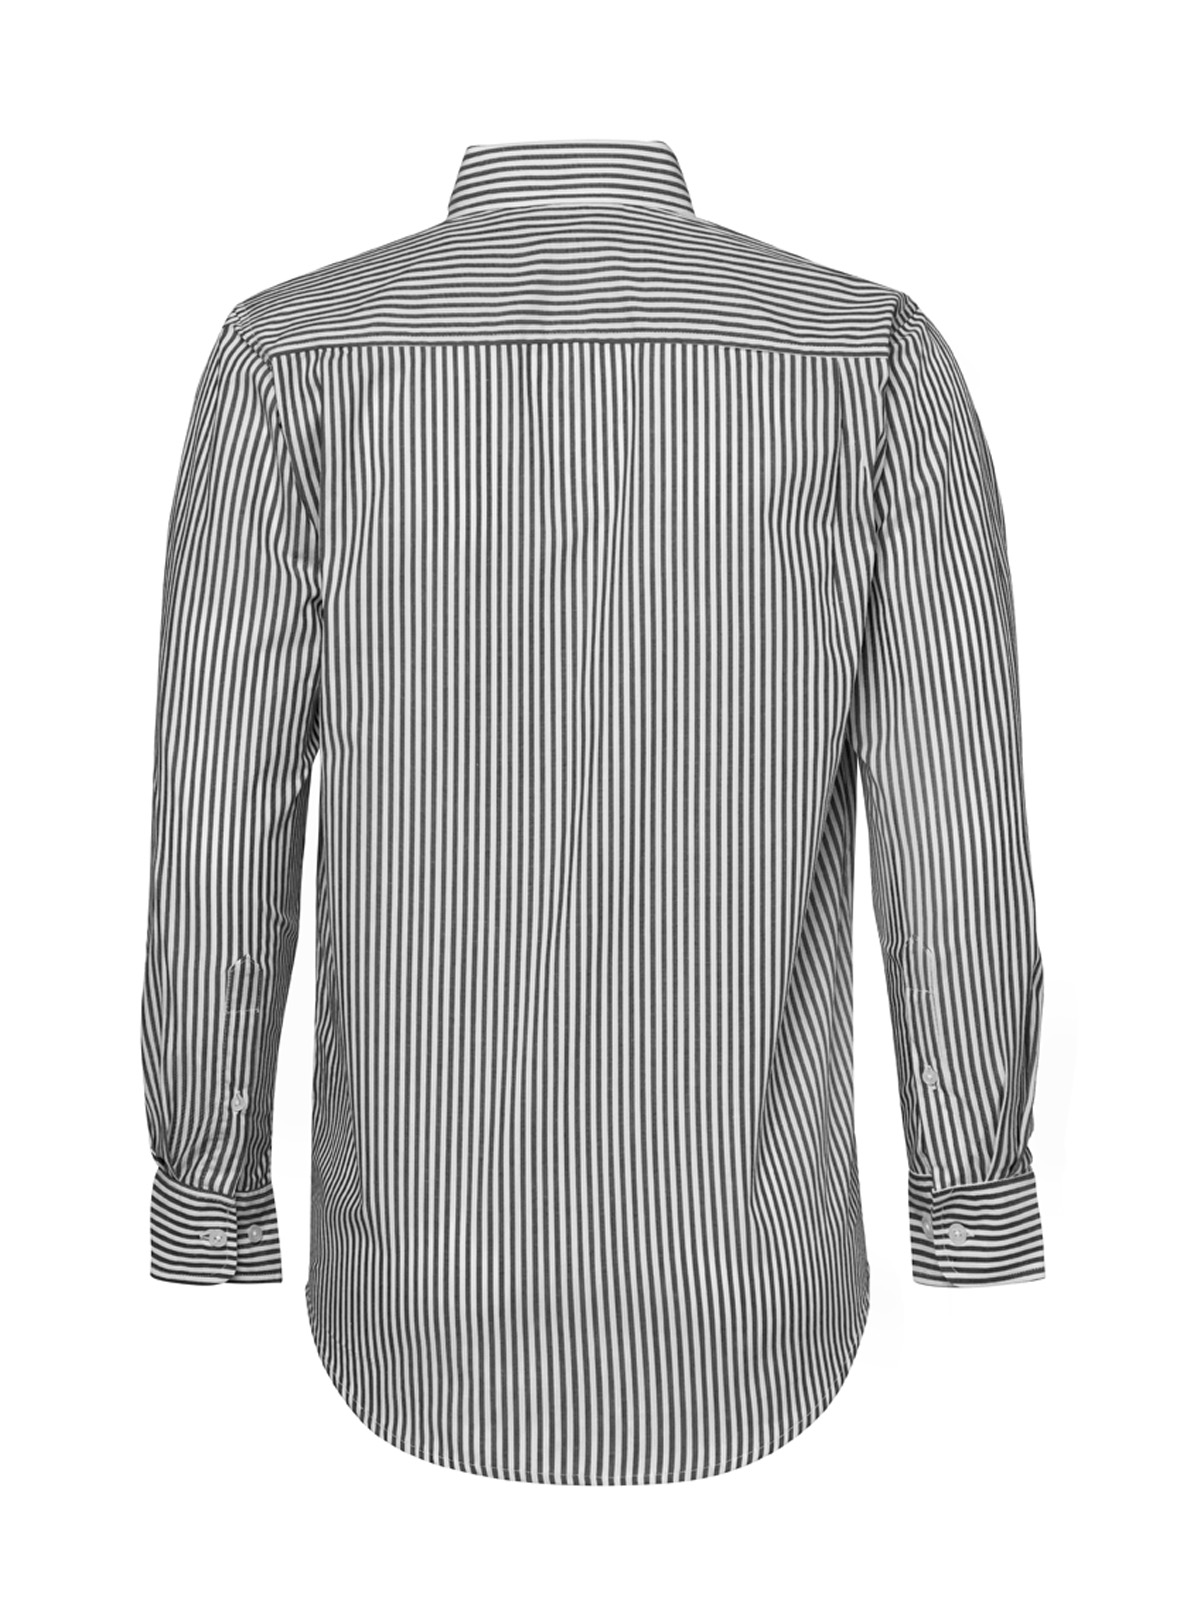 gray striped shirts